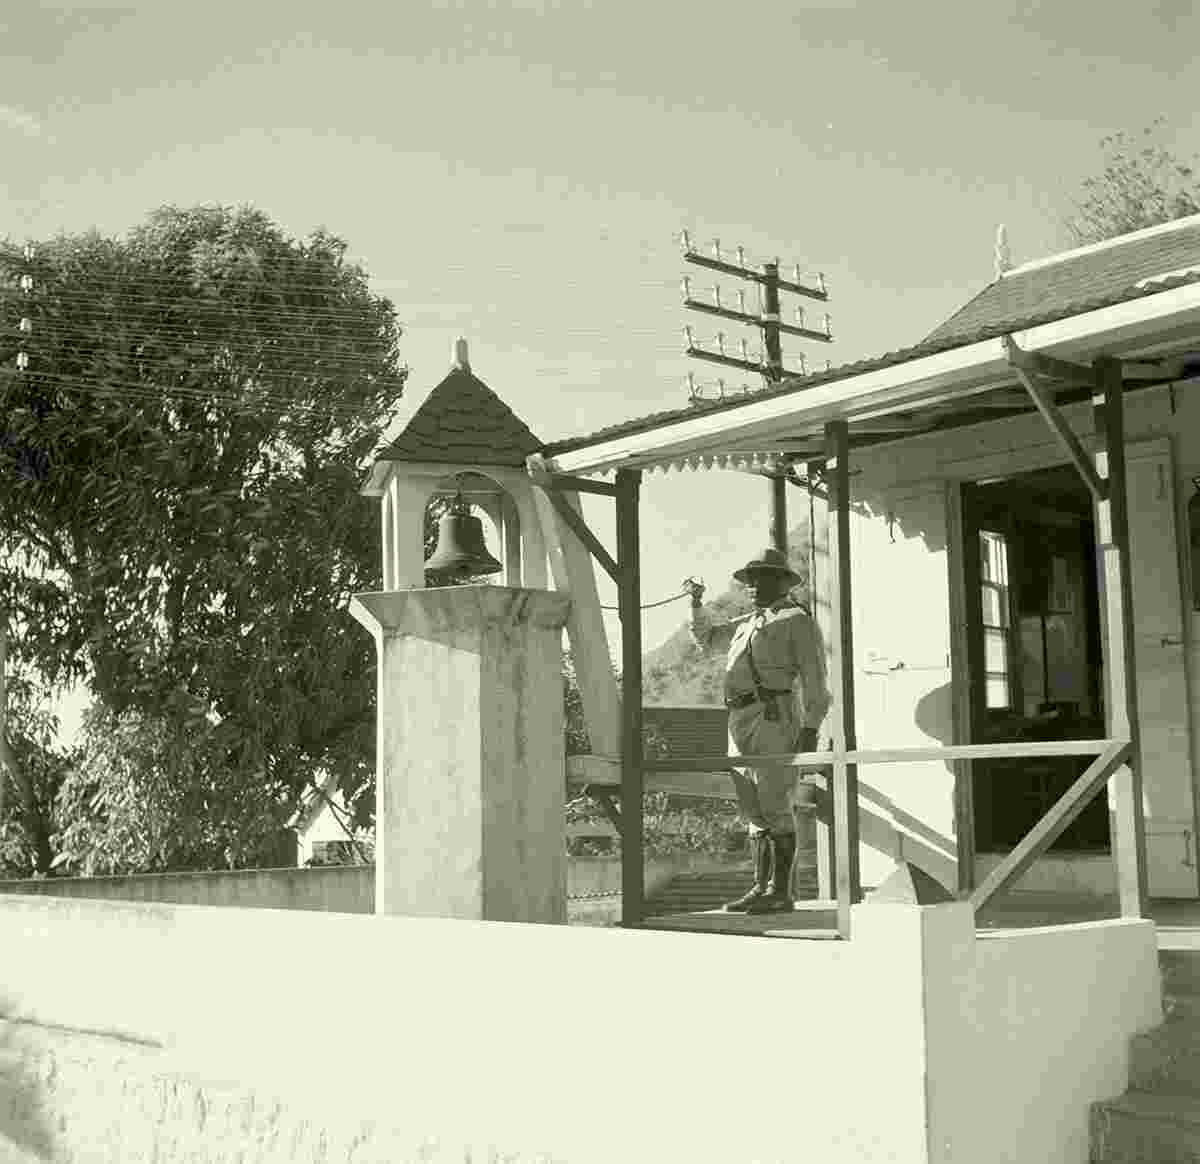 The Botton. Police station, 1947